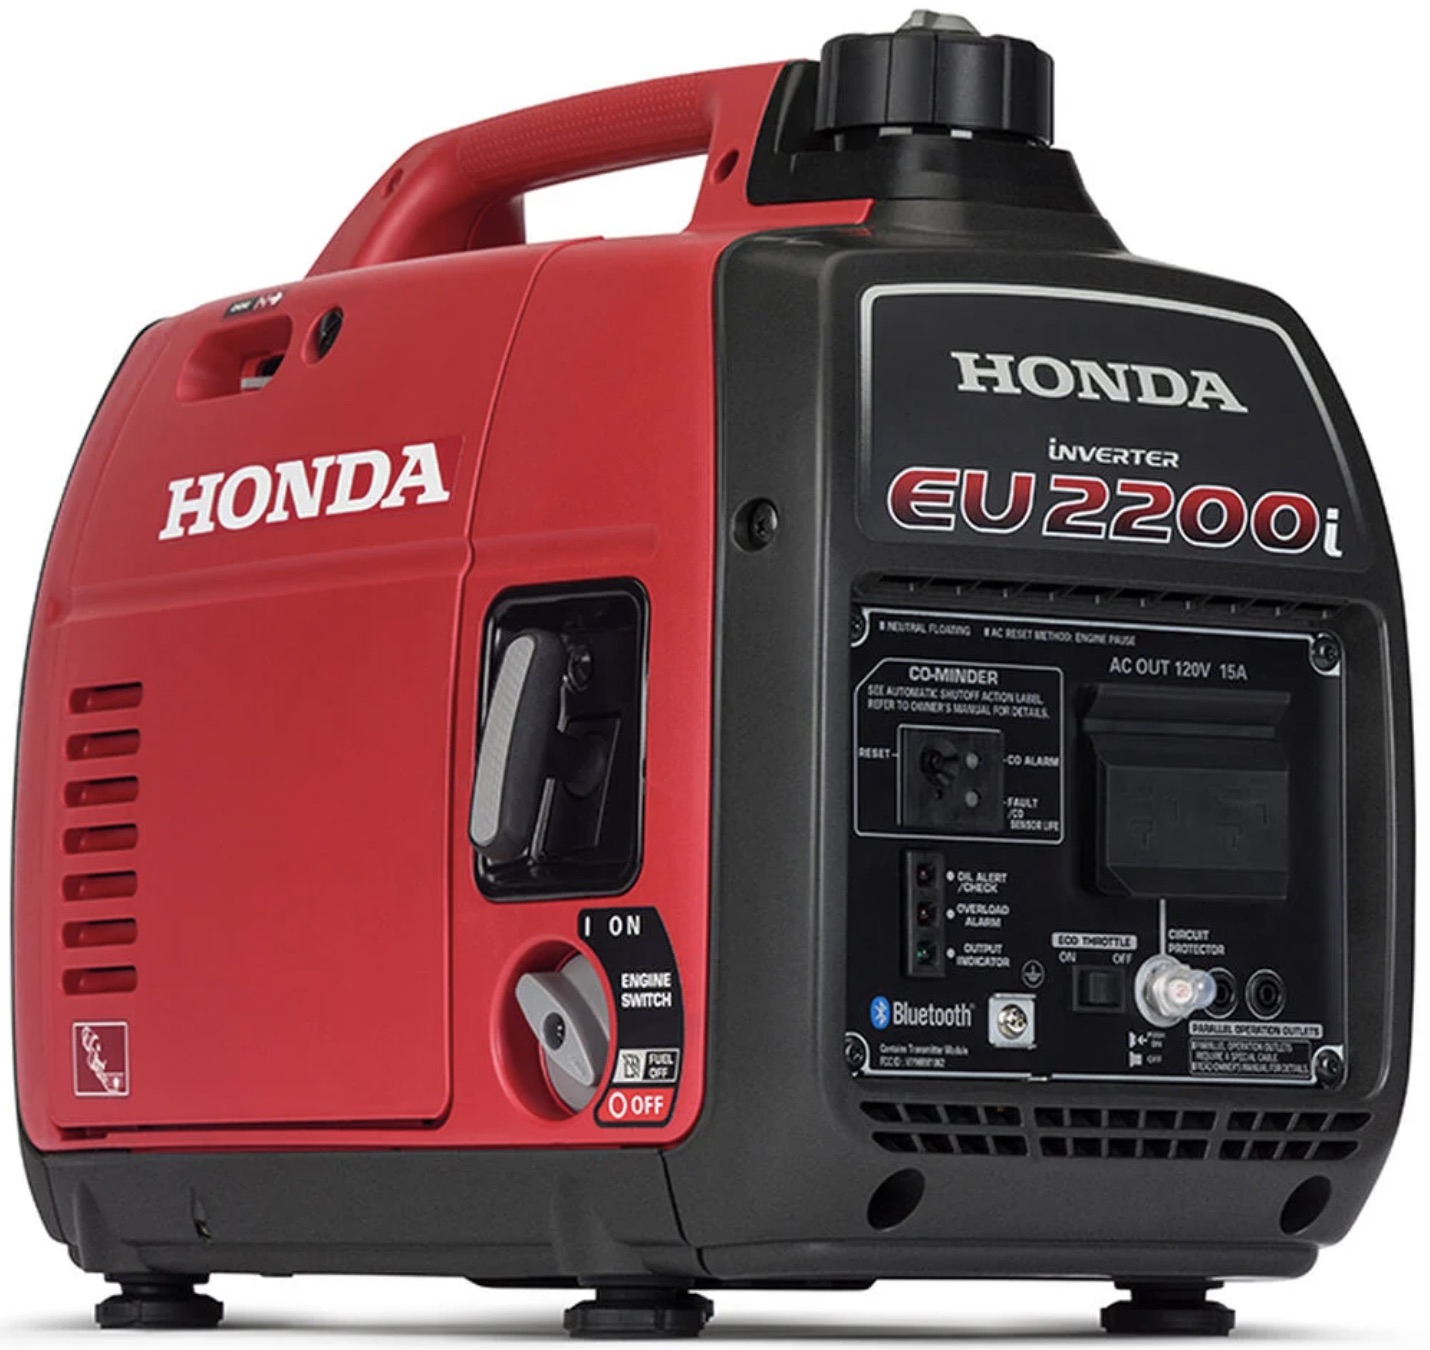 Honda EU2200i portable generator